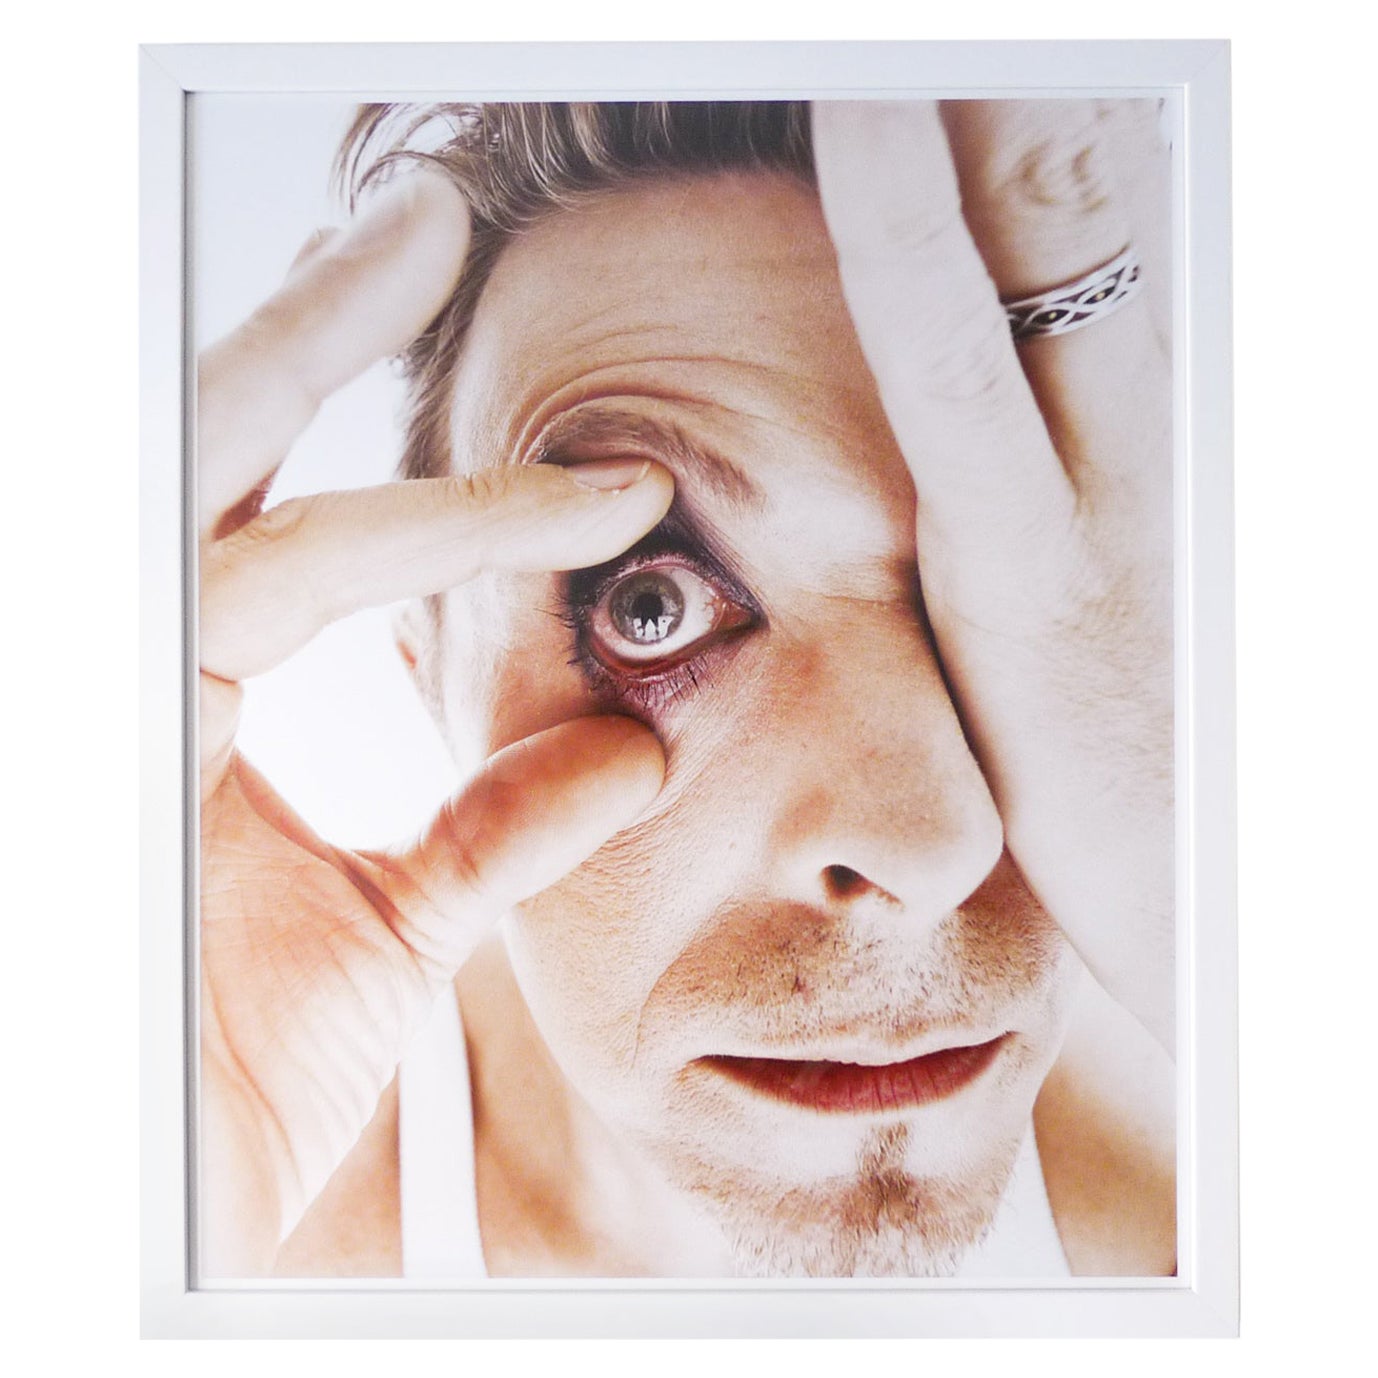 Edition limitée signée "Bowie's Eye"". Impression par Rankin, Dazed & Confused 1995.